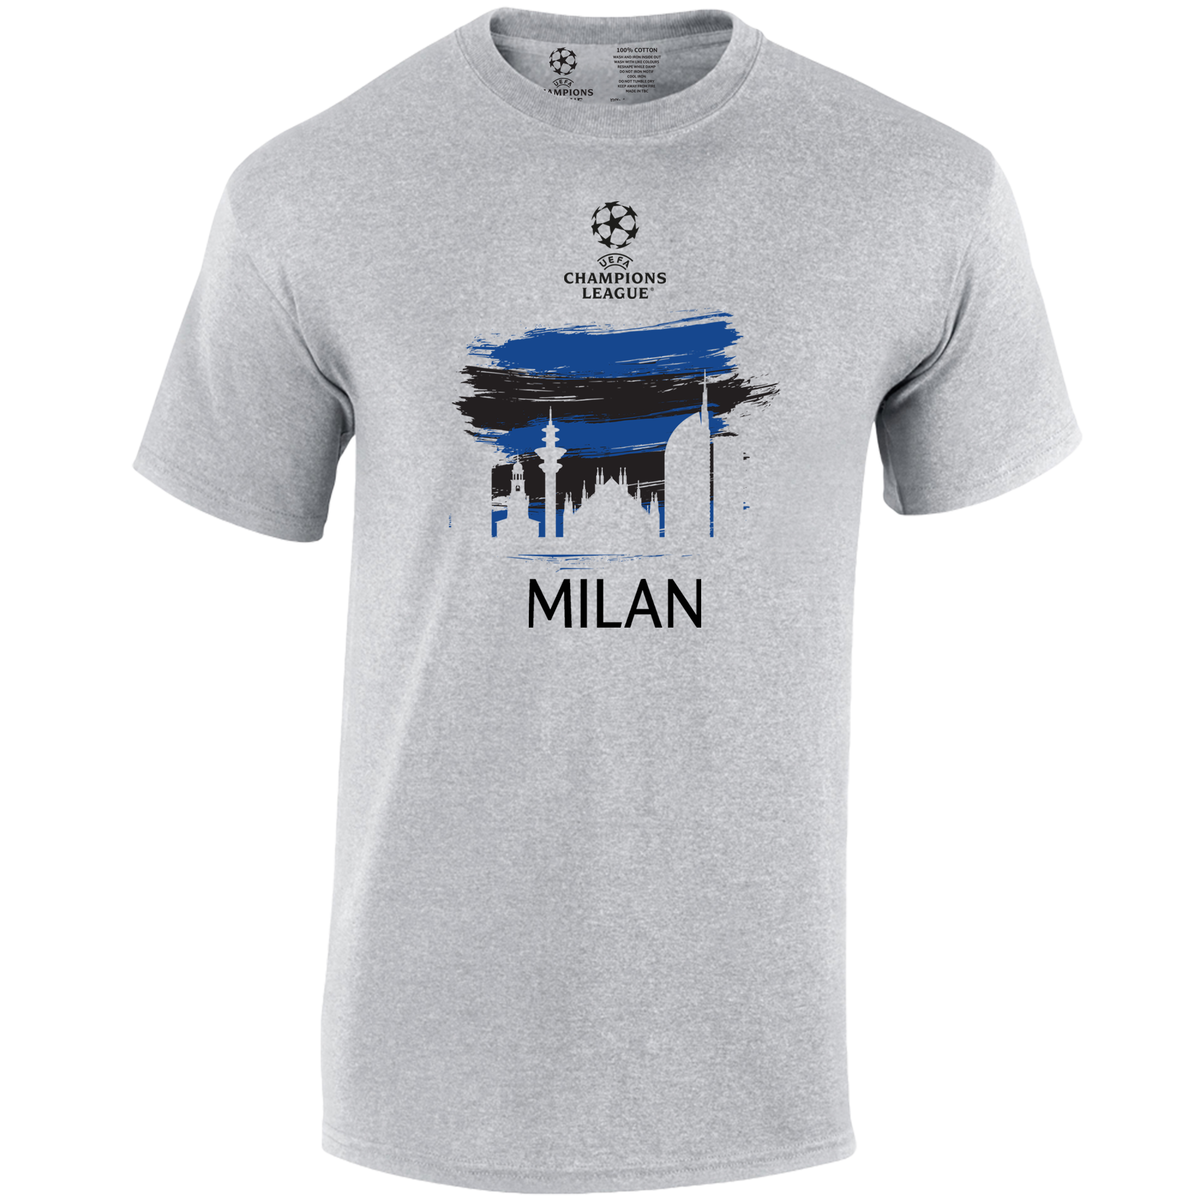 Champions League Milan City Blue Painted Skyline T-Shirt Grey